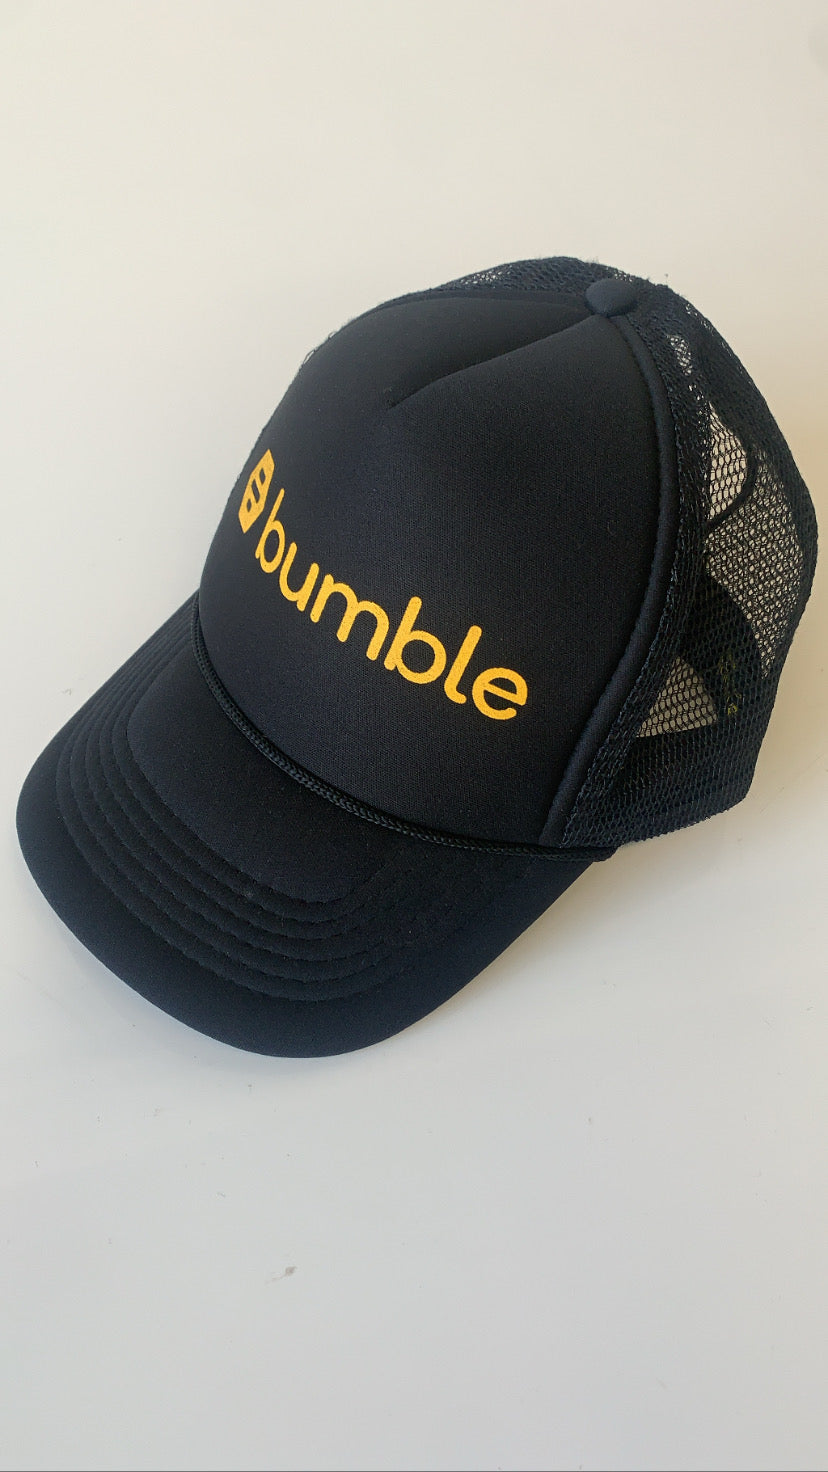 Bumble Trucker Hat